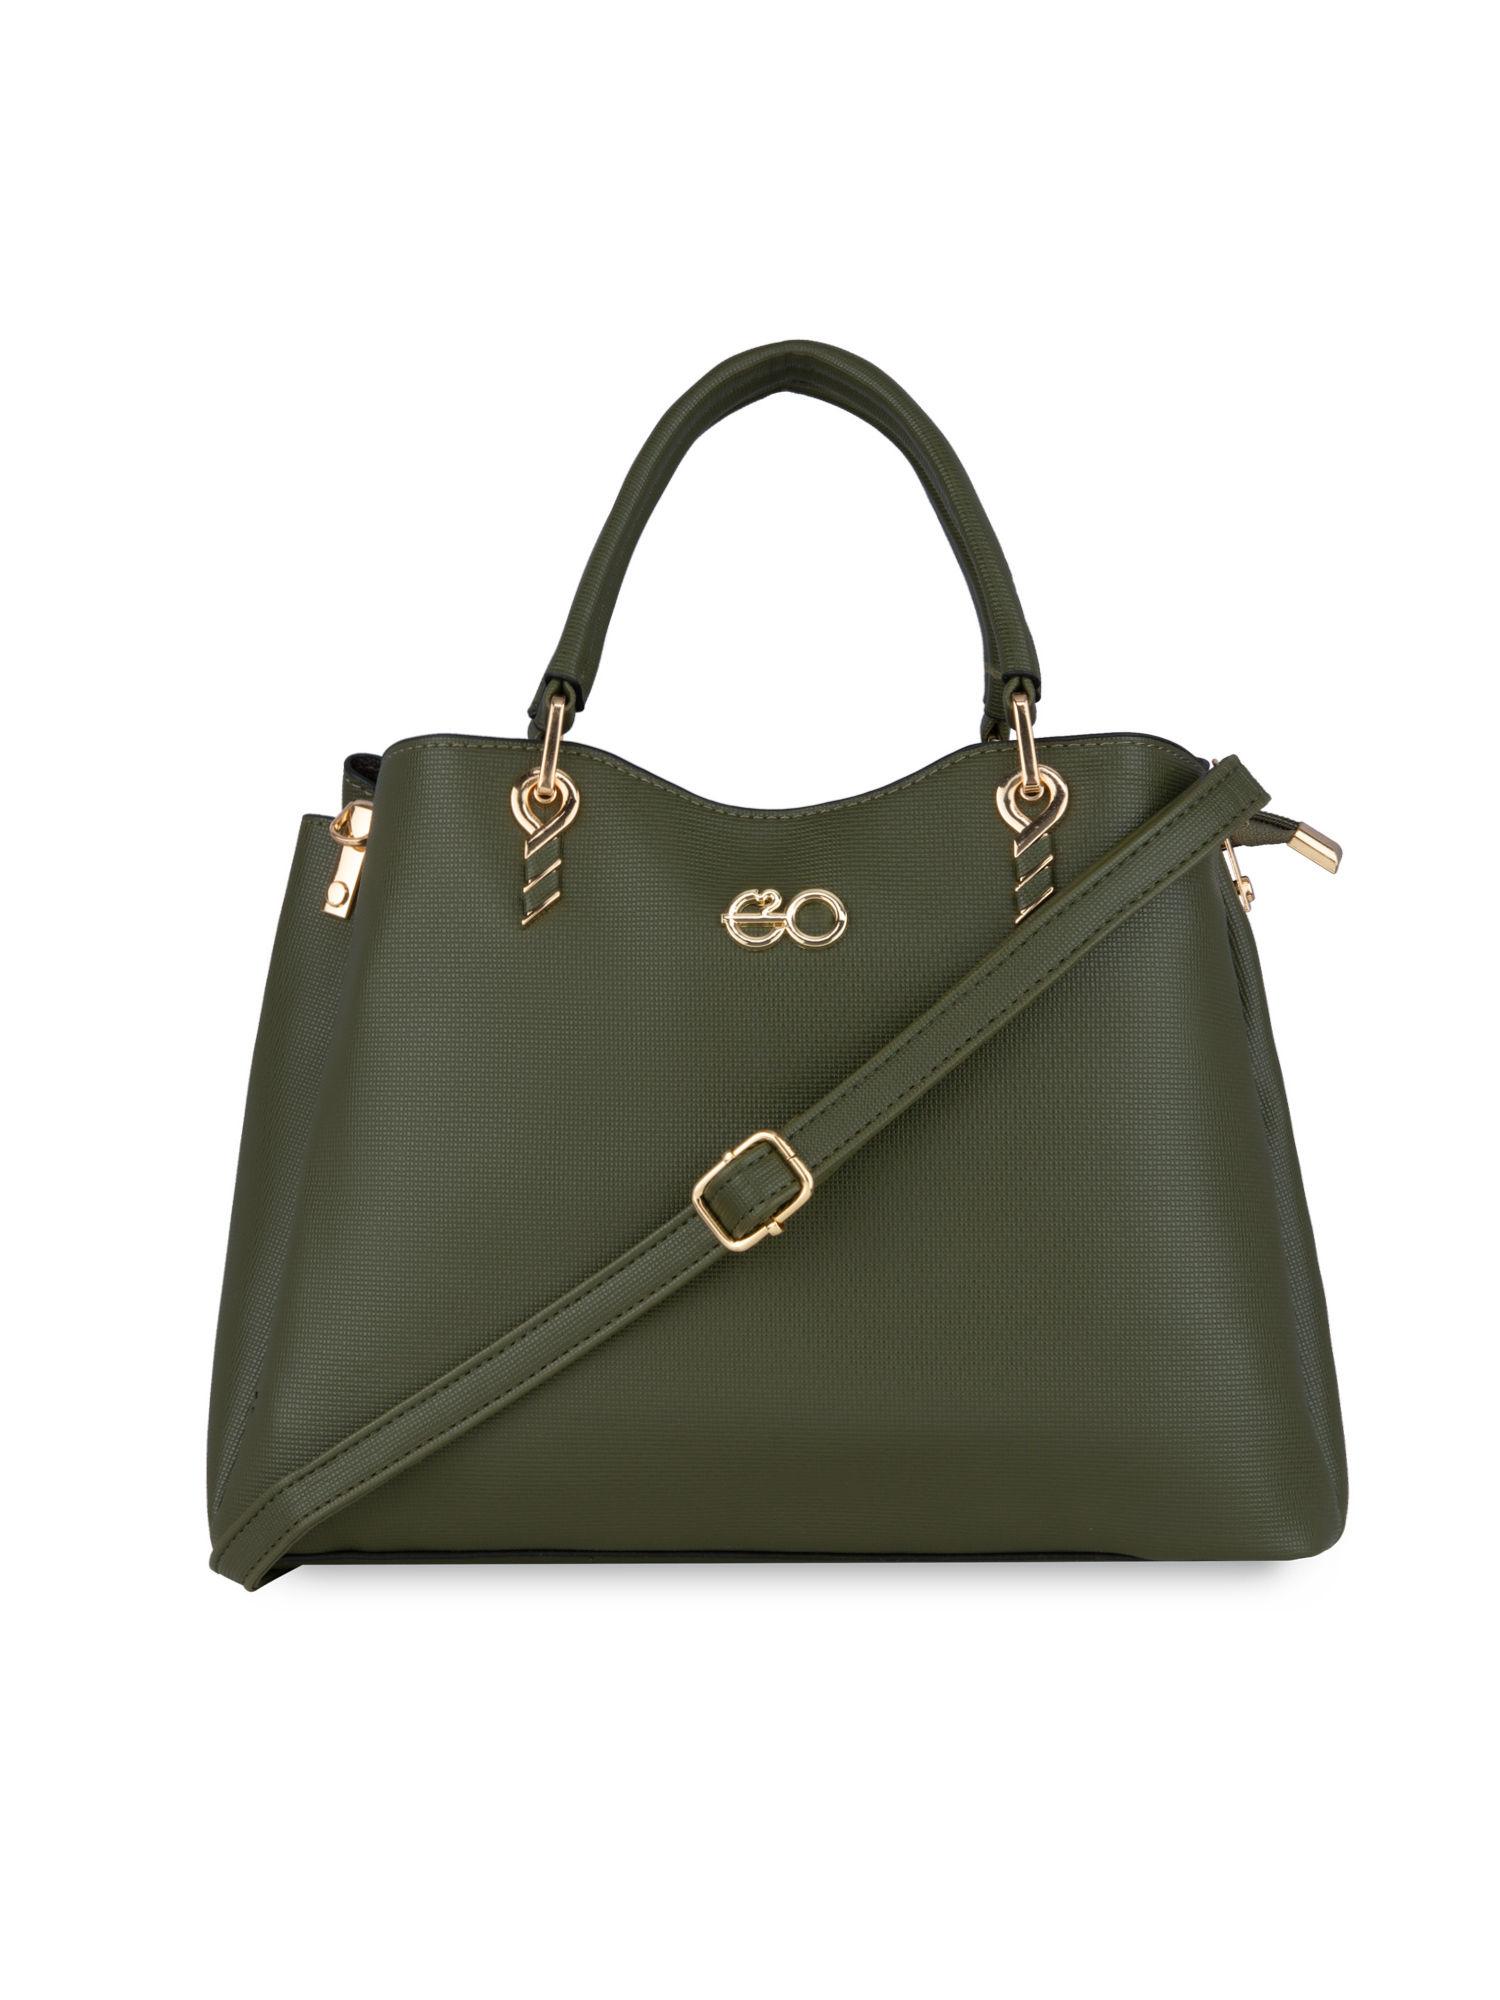 structured satchel for women - green